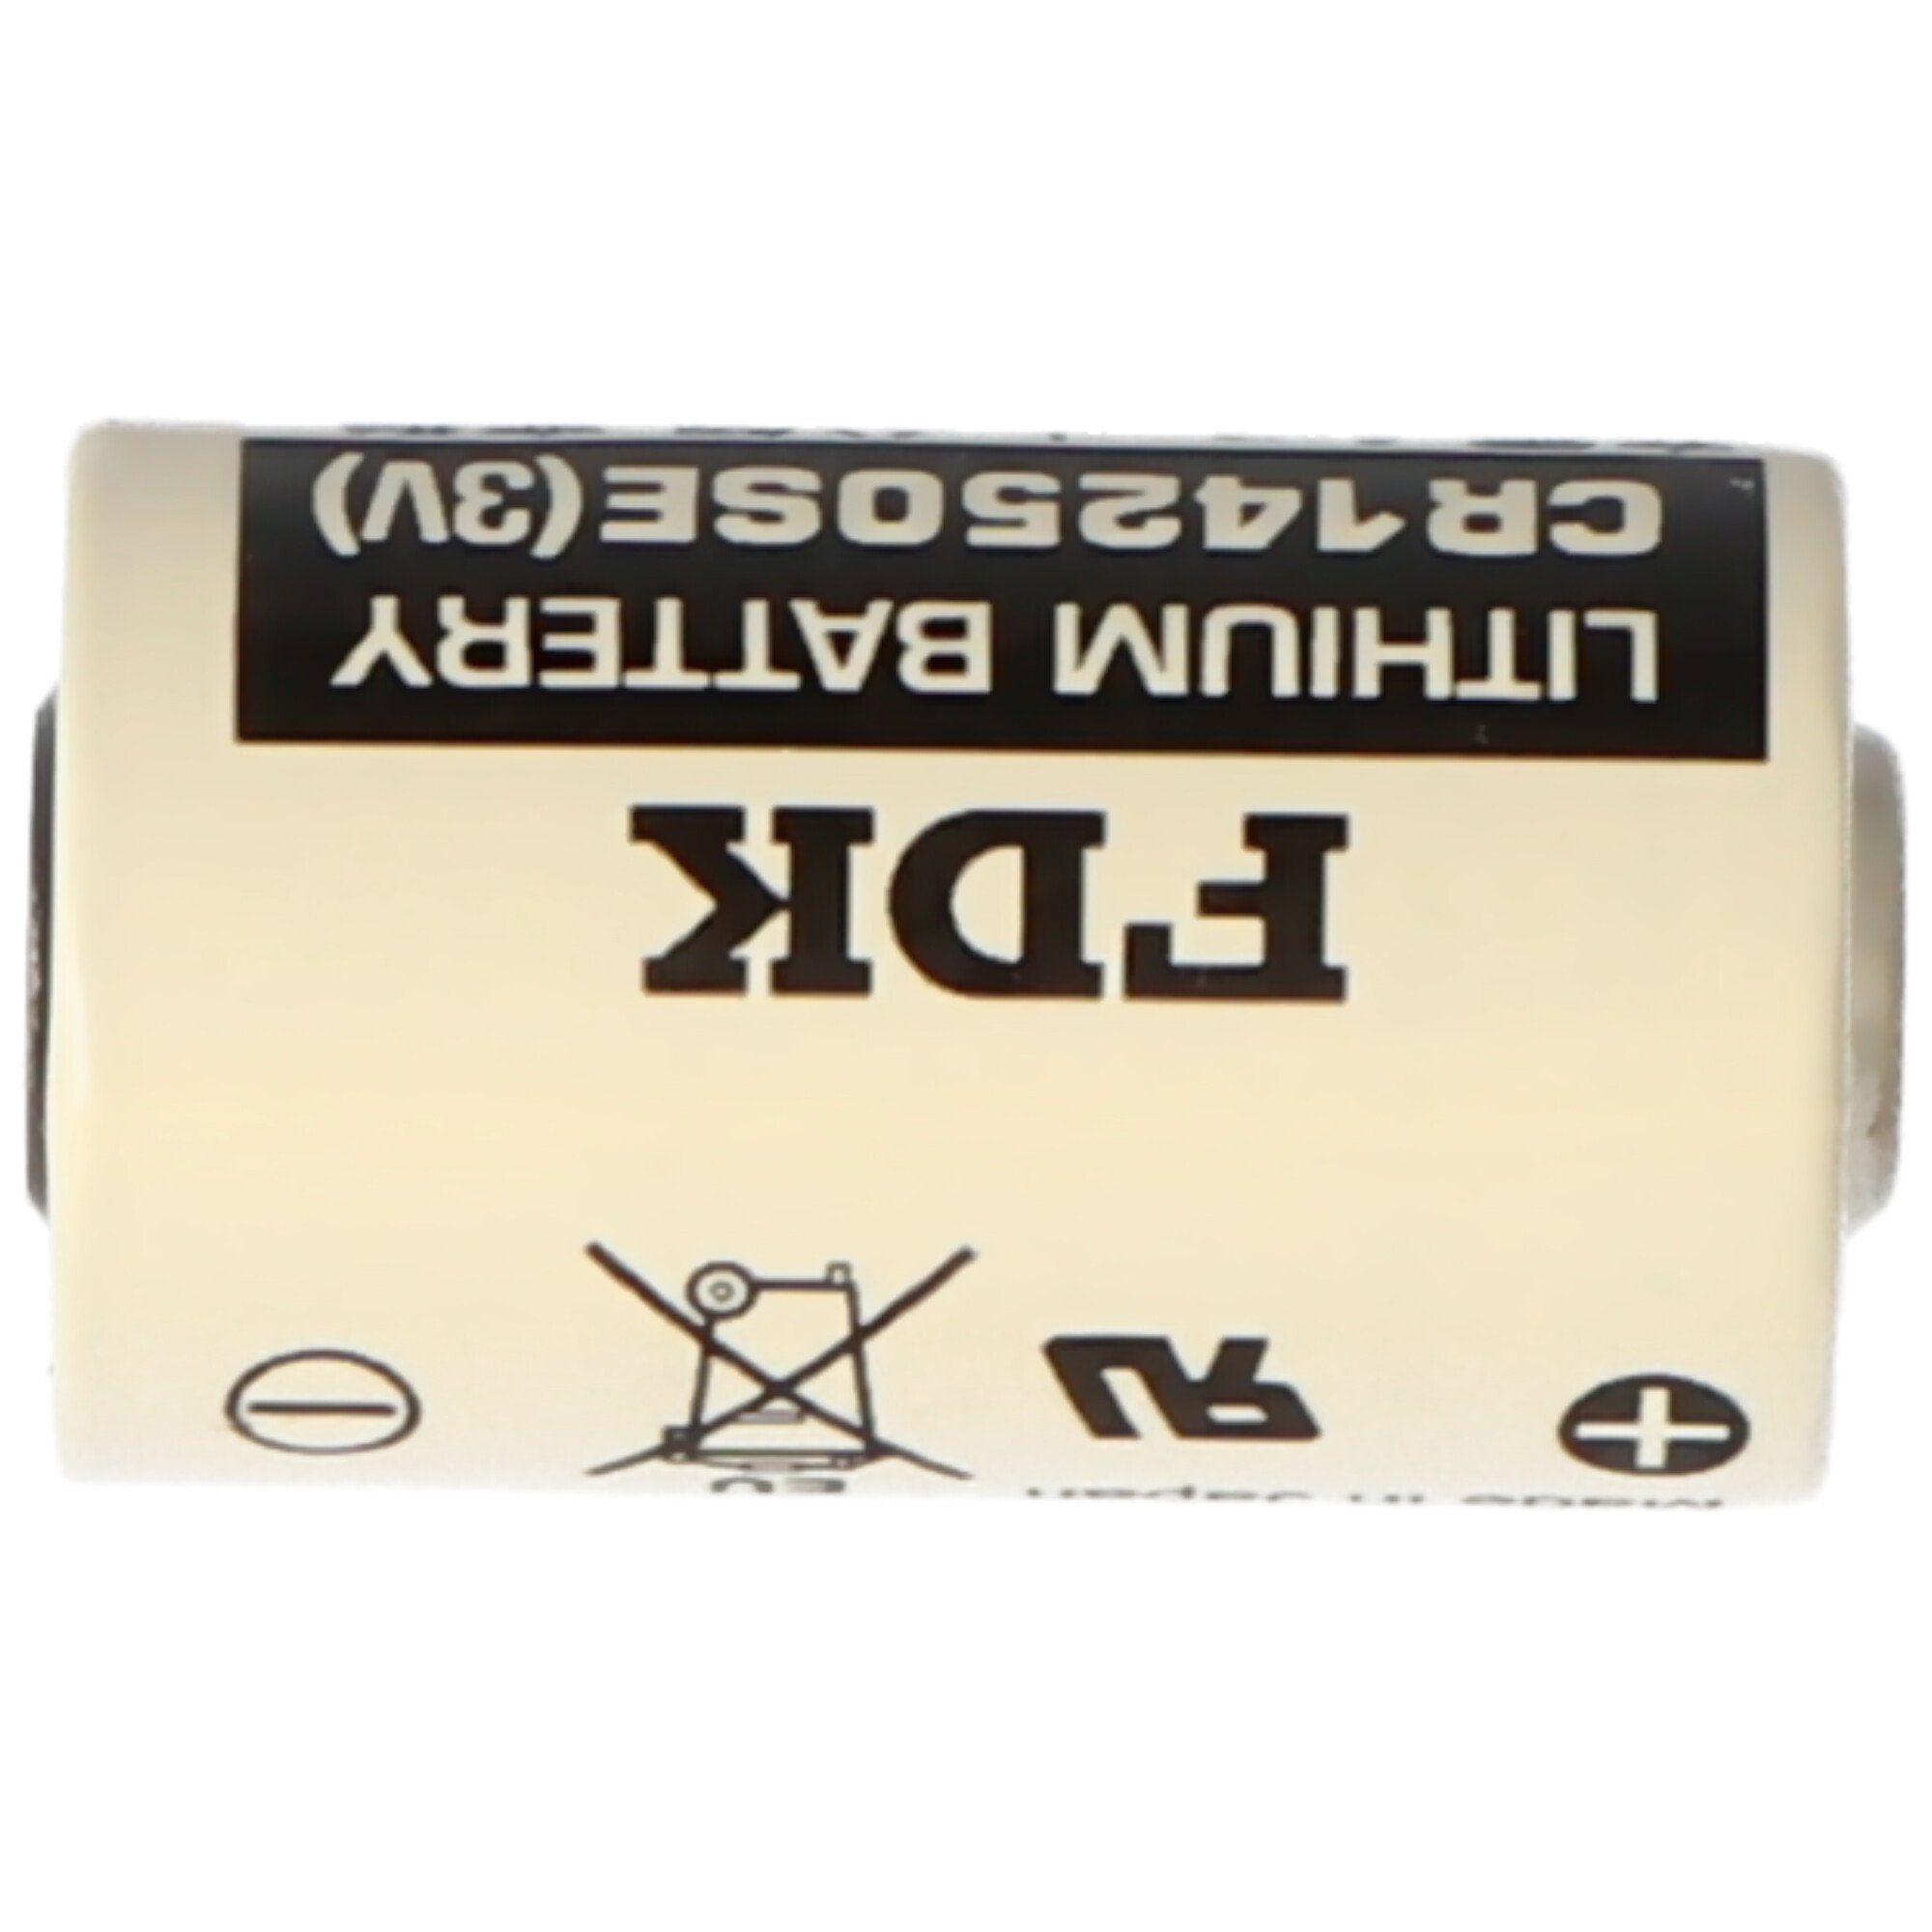 Sanyo Sanyo Lithium Batterie CR14250 IEC 1/2AA, SE FDK Batterie, CR14250 CR14250 (3,0 V)